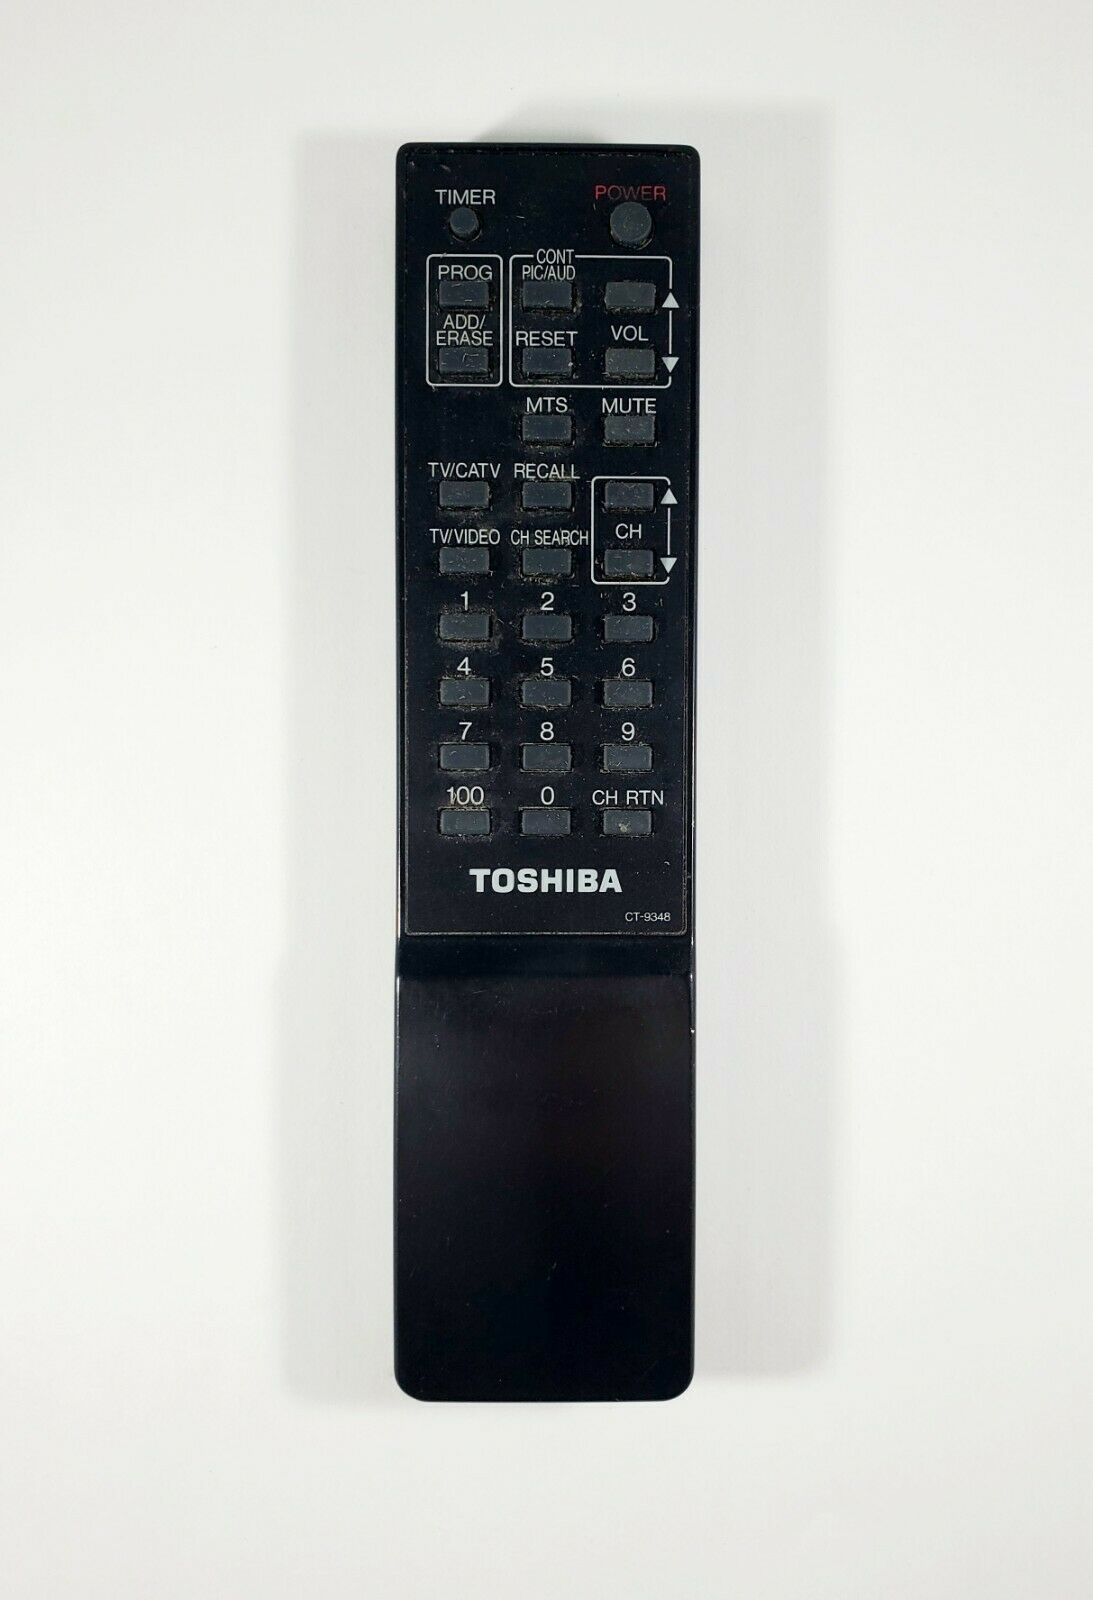 Genuine Toshiba CT-9348 TV Remote Control for 23120229 23120459 CF1311J CF19122 - $8.53